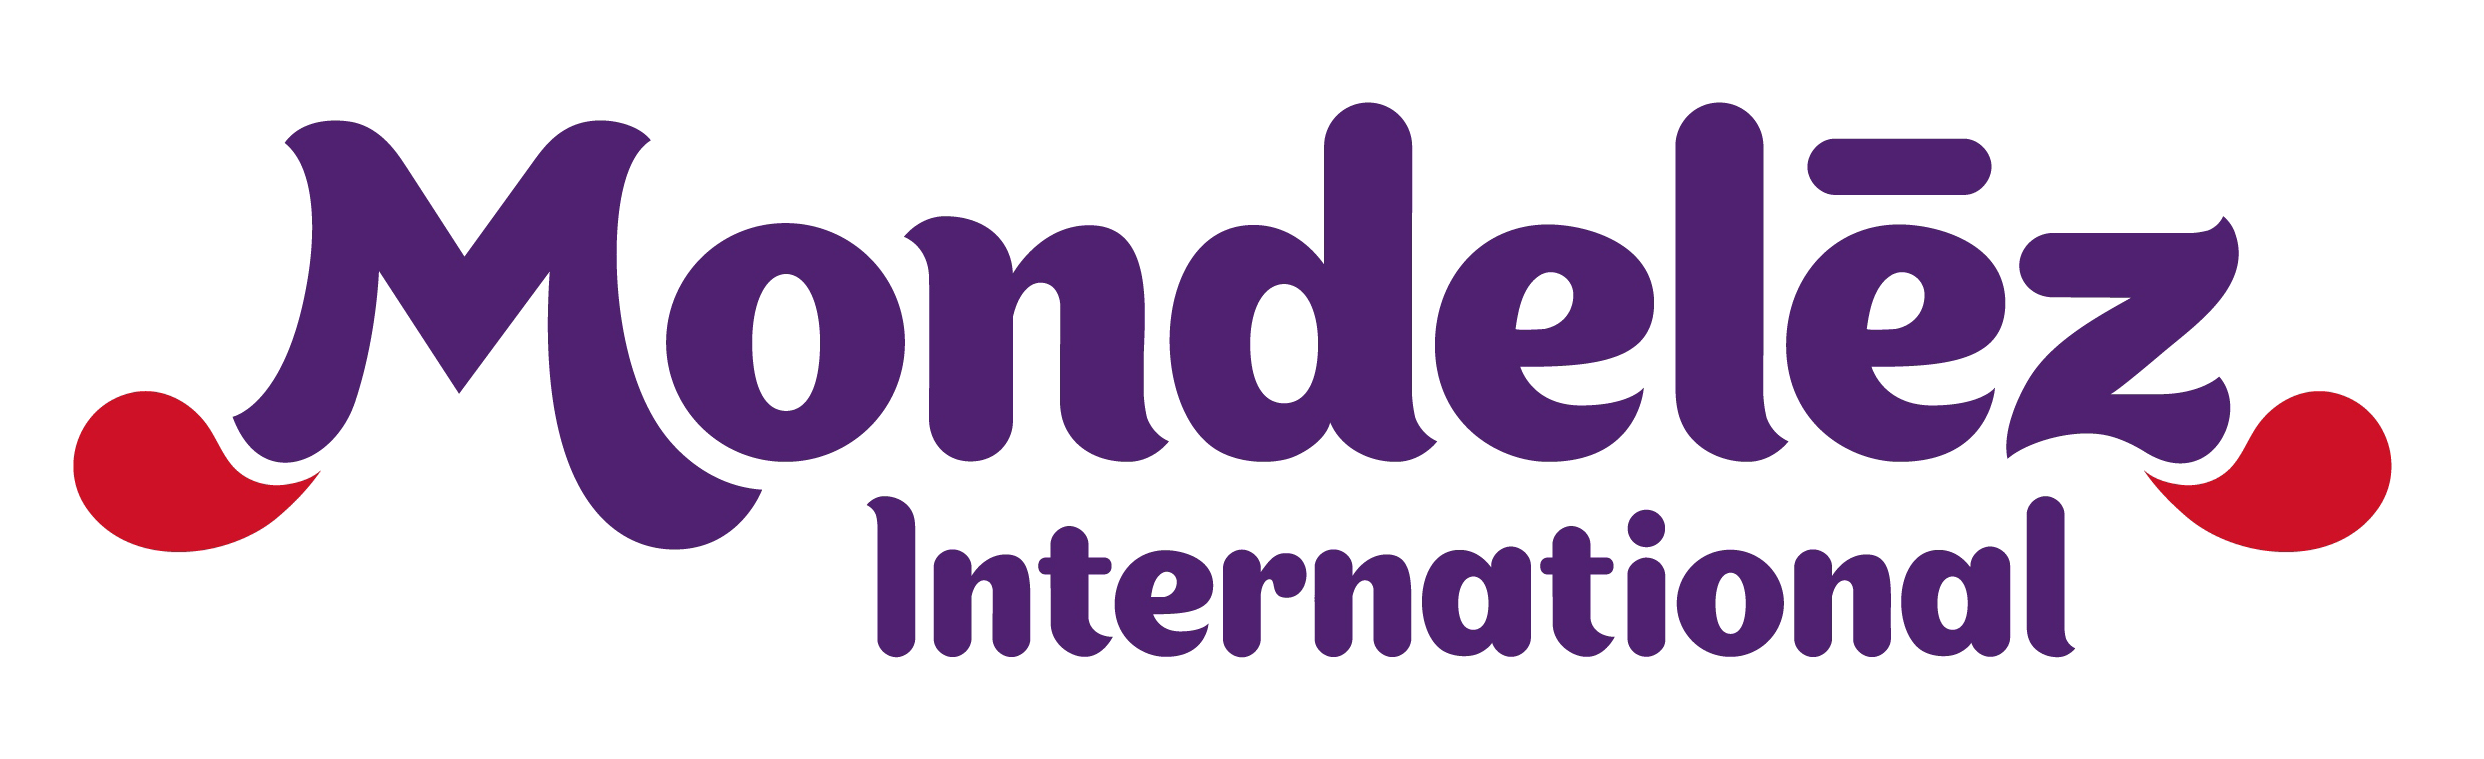 Mondelez International Logo PNG Image PurePNG Free Transparent CC0 